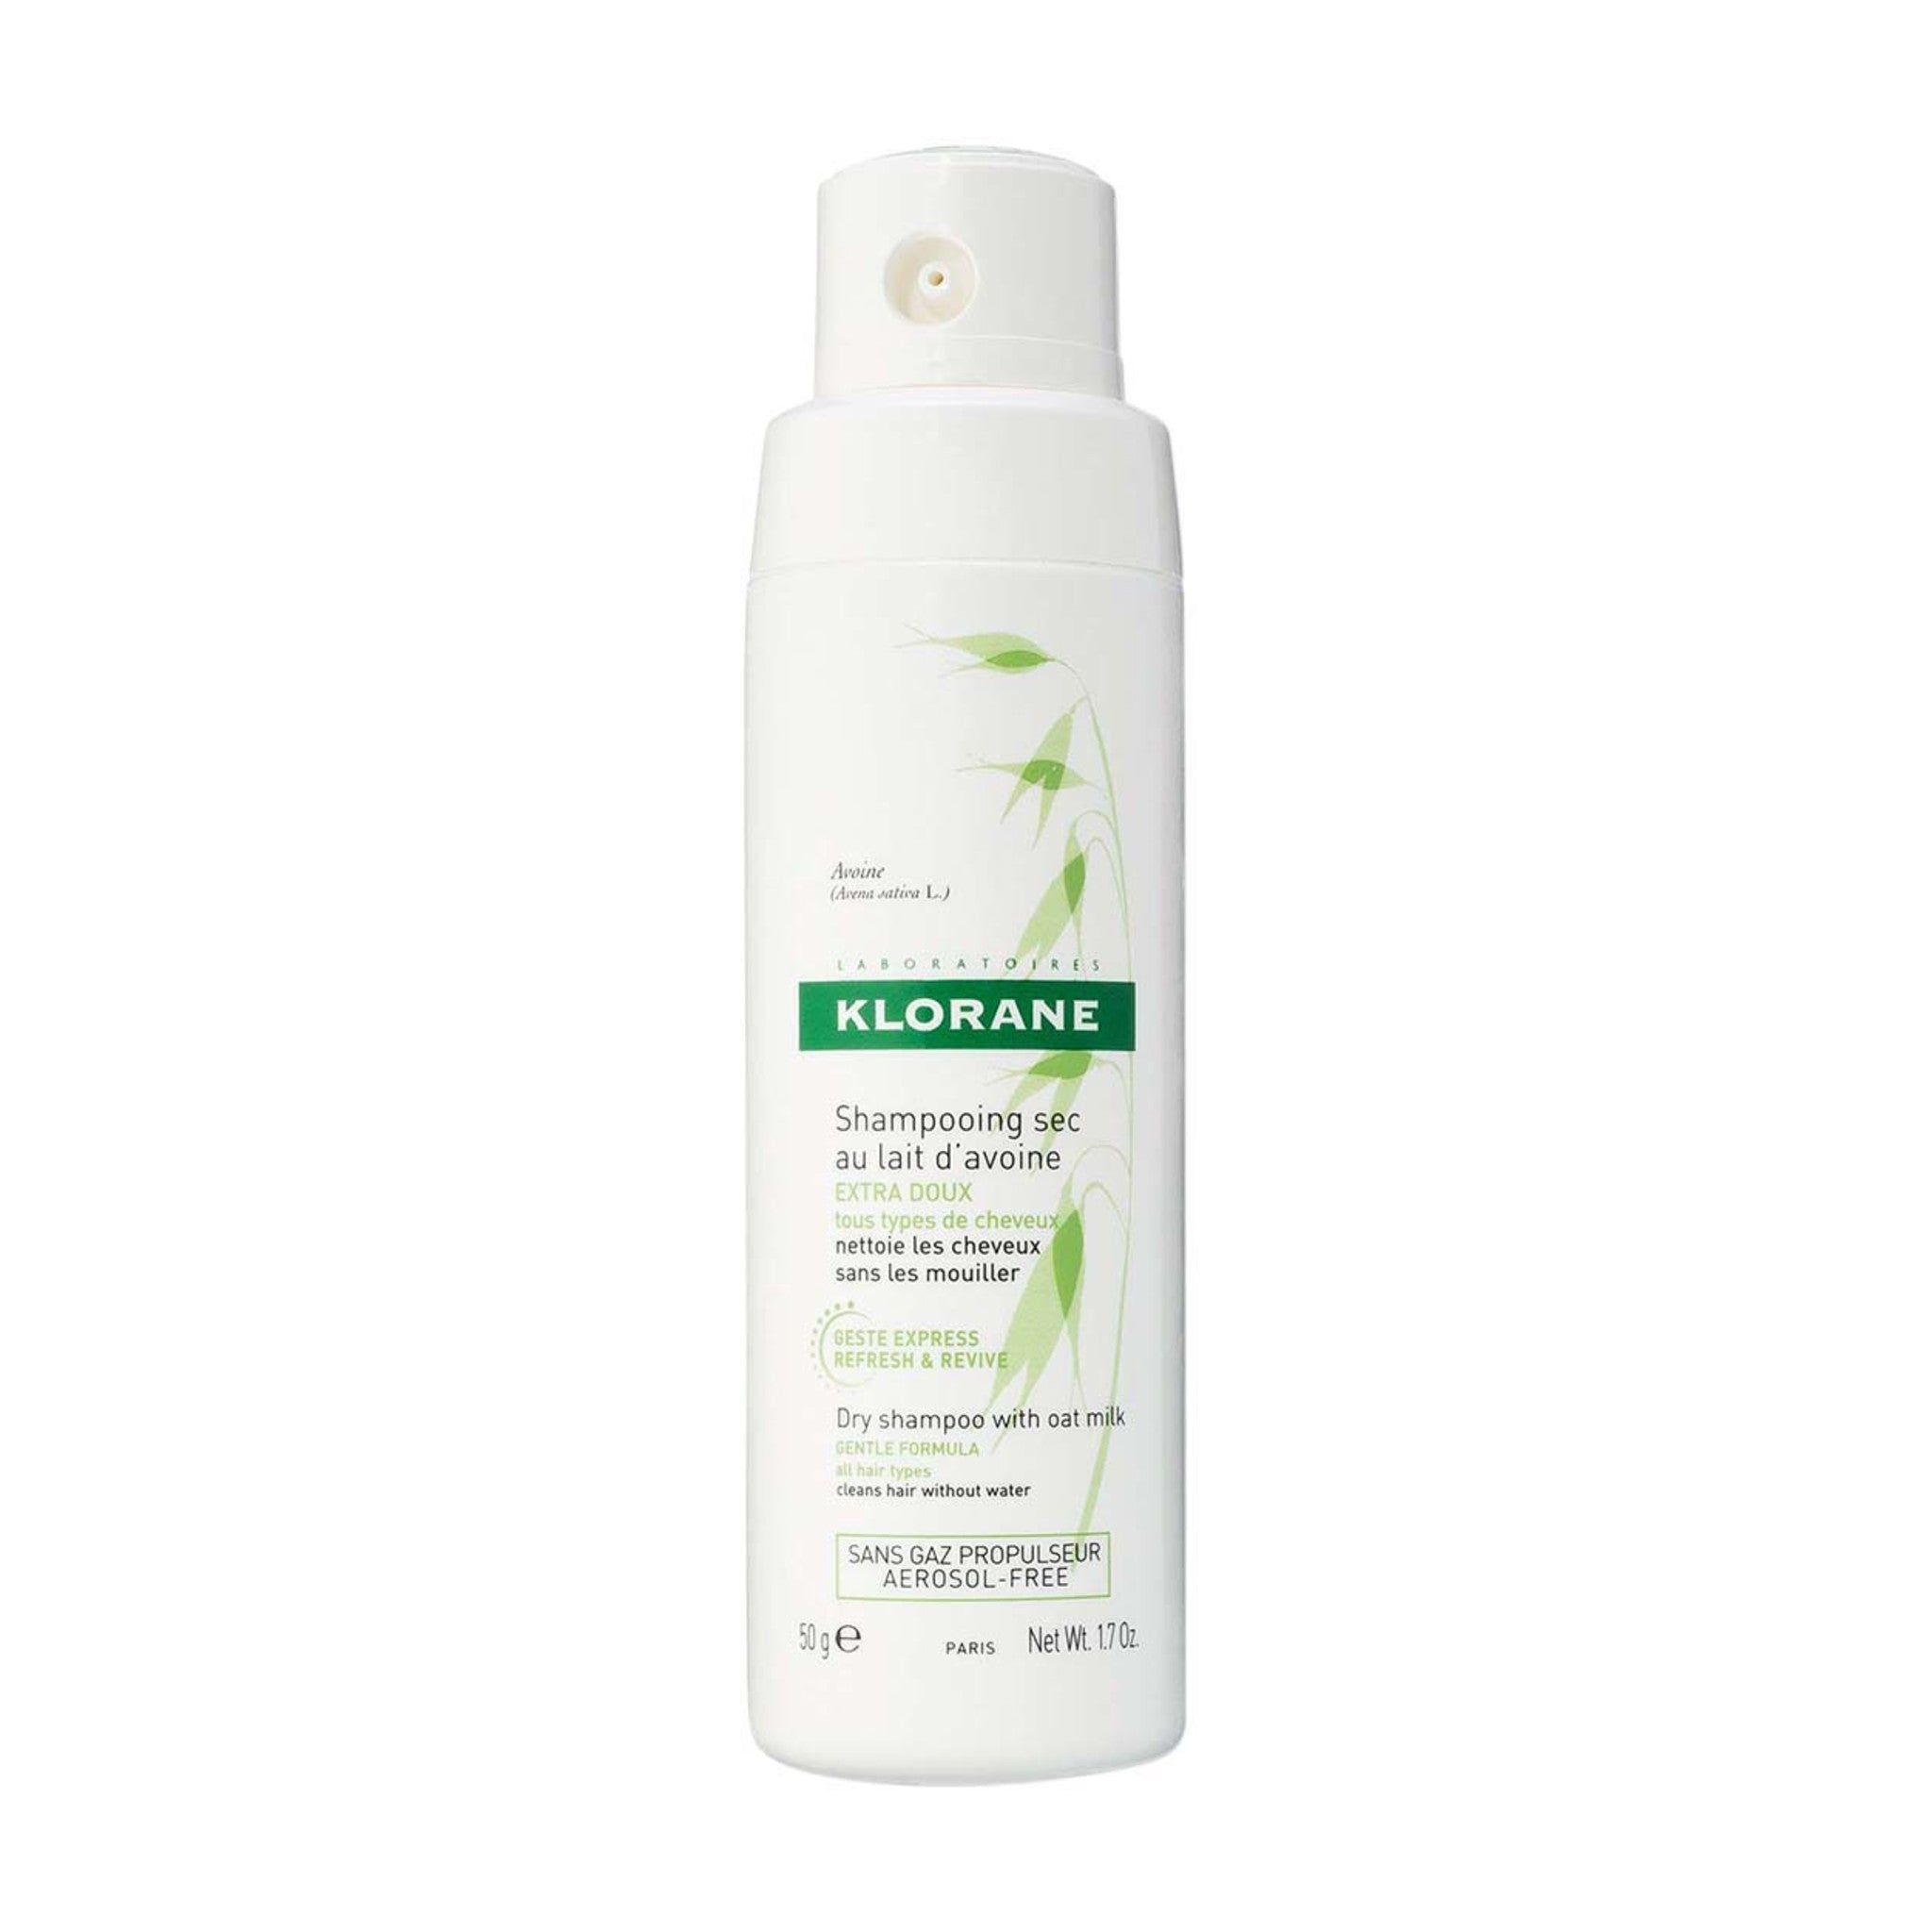 Klorane Dry Shampoo With Oat Milk Non-Aerosol main image.